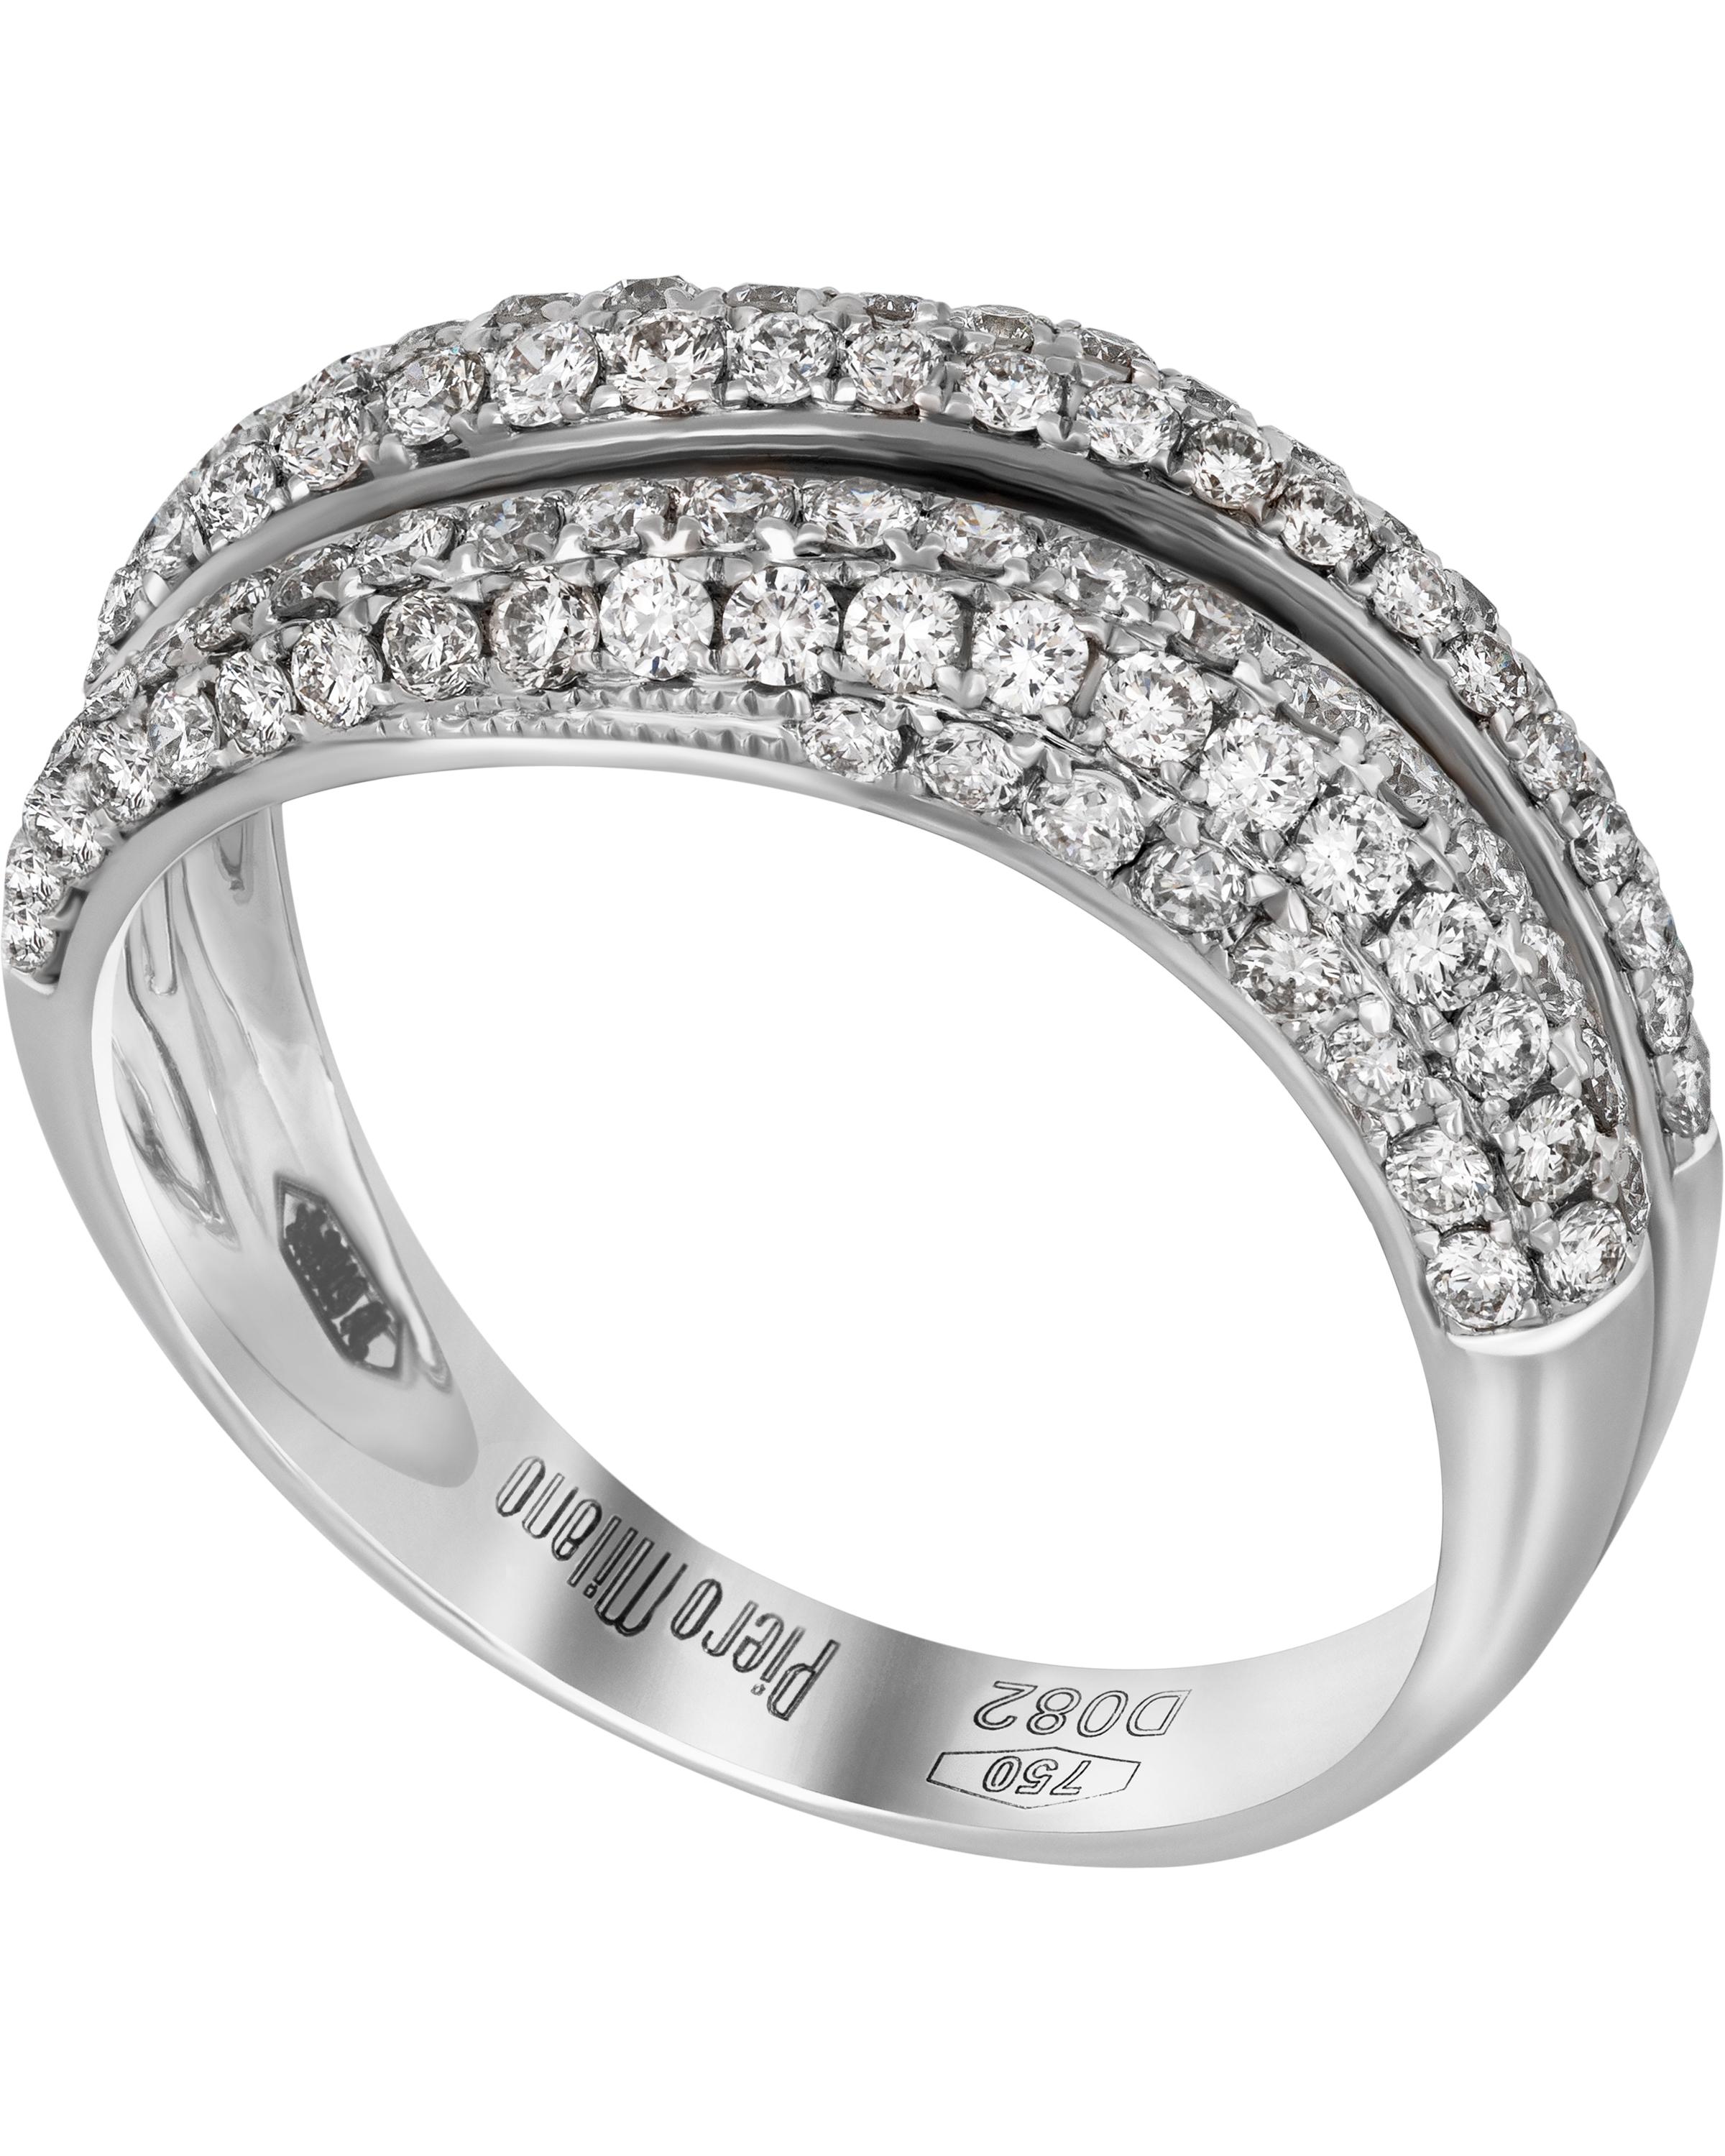 Contemporary Piero Milano 18K White Gold Diamond Ring Sz 8 For Sale